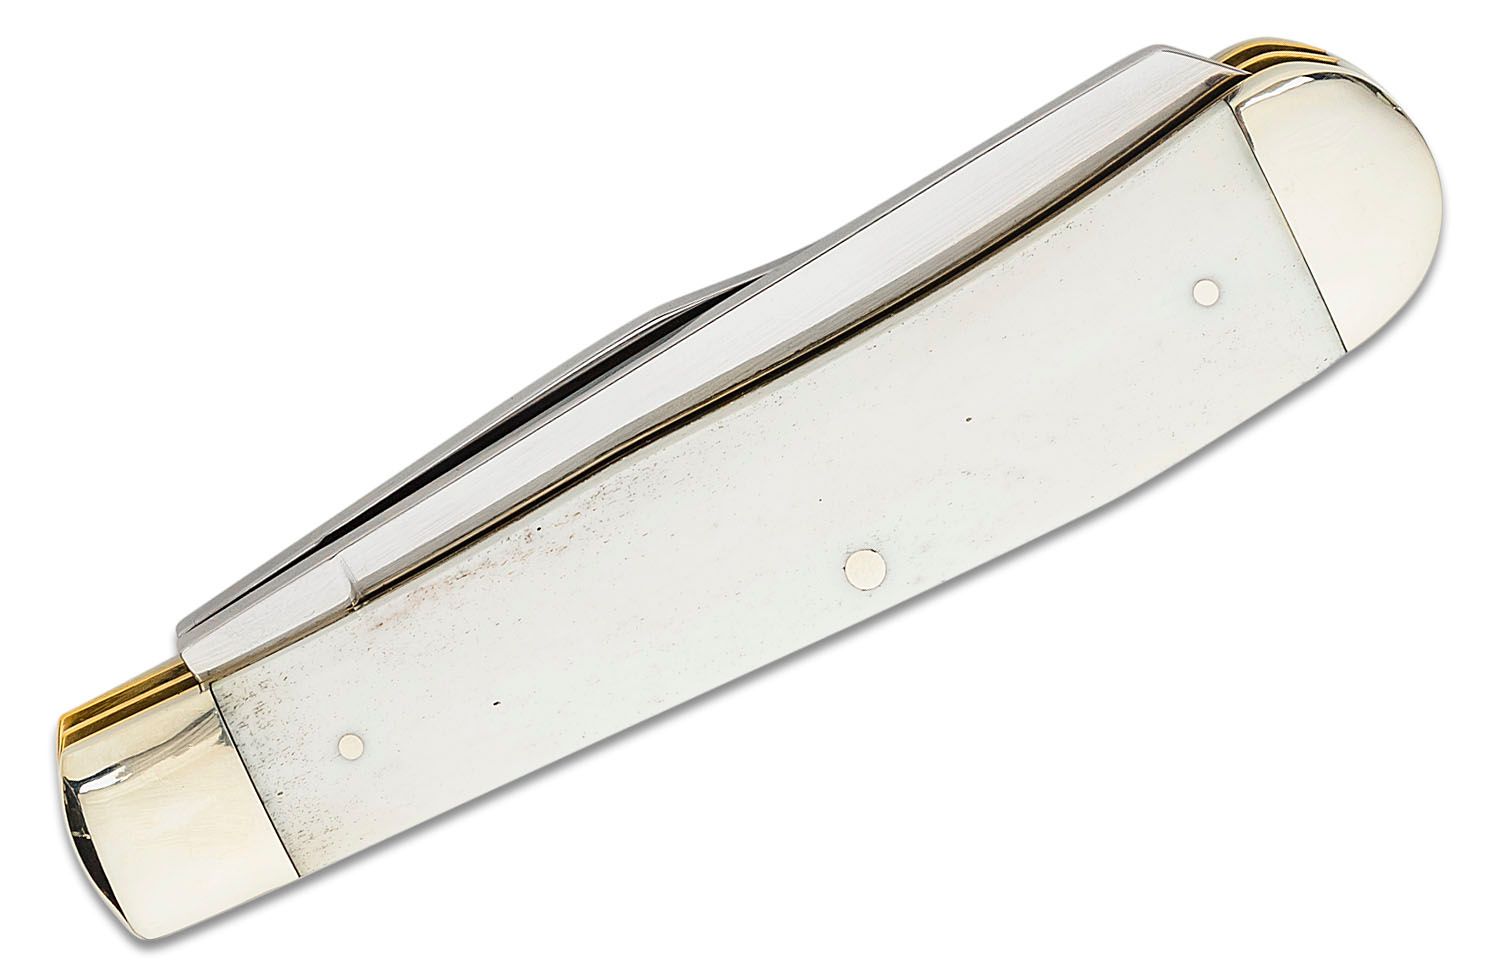 Boker Trapper Knife 110826 - D2 Steel Blades - Smooth White Bone - German  Import